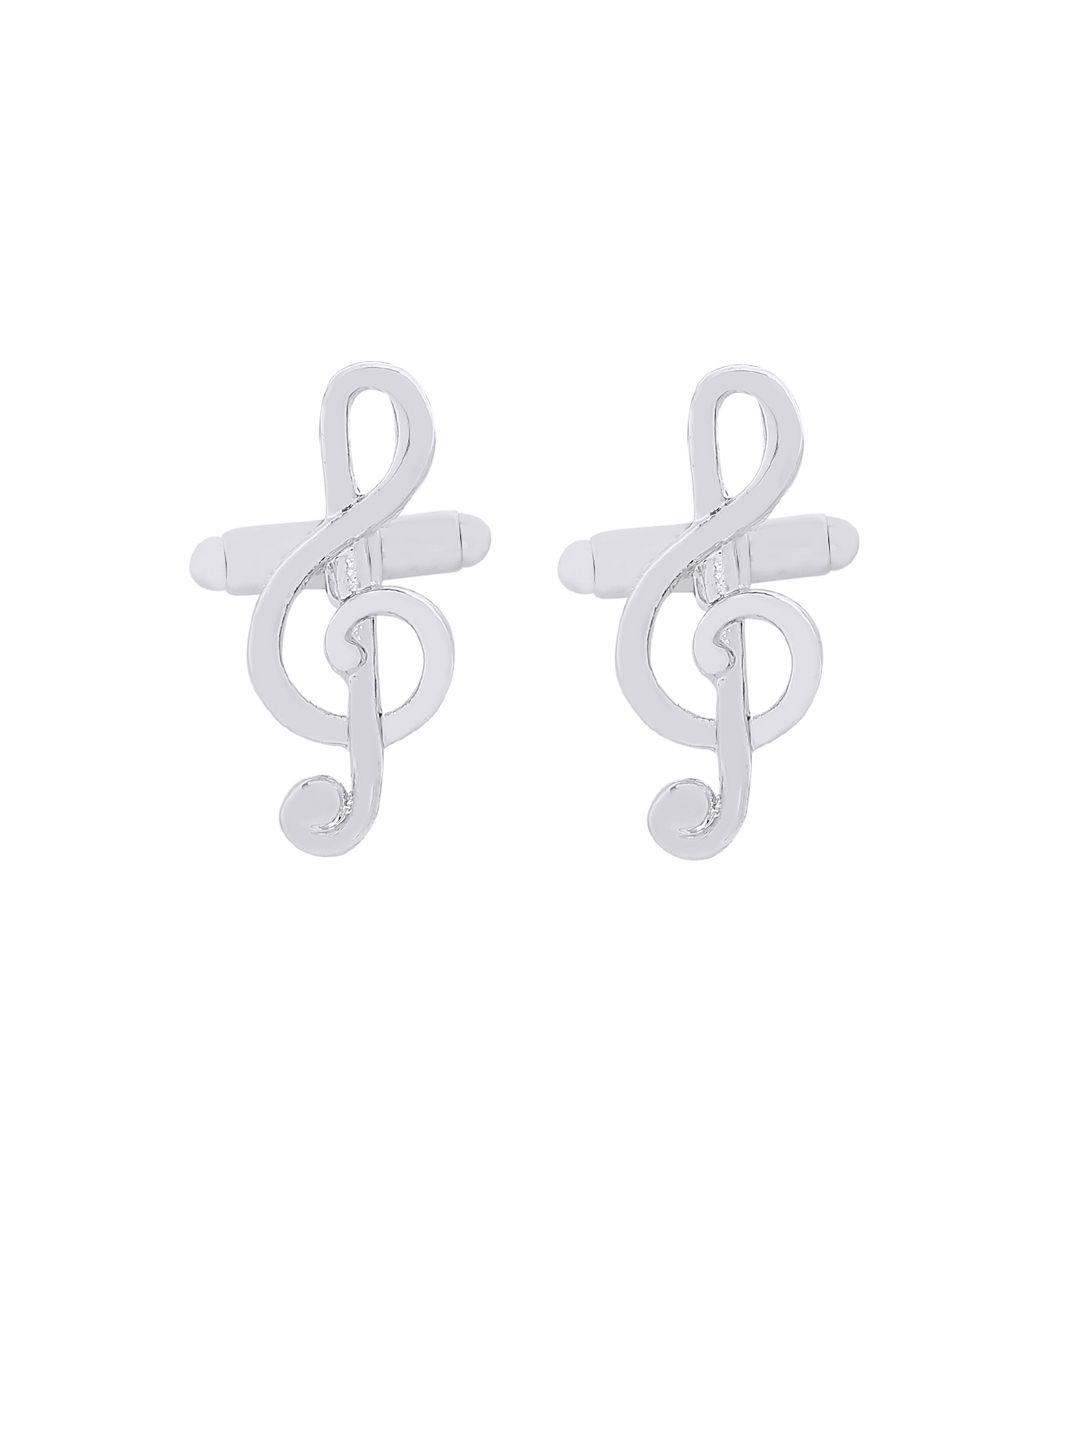 bodha rhodium-plated musical symbol shaped cufflinks